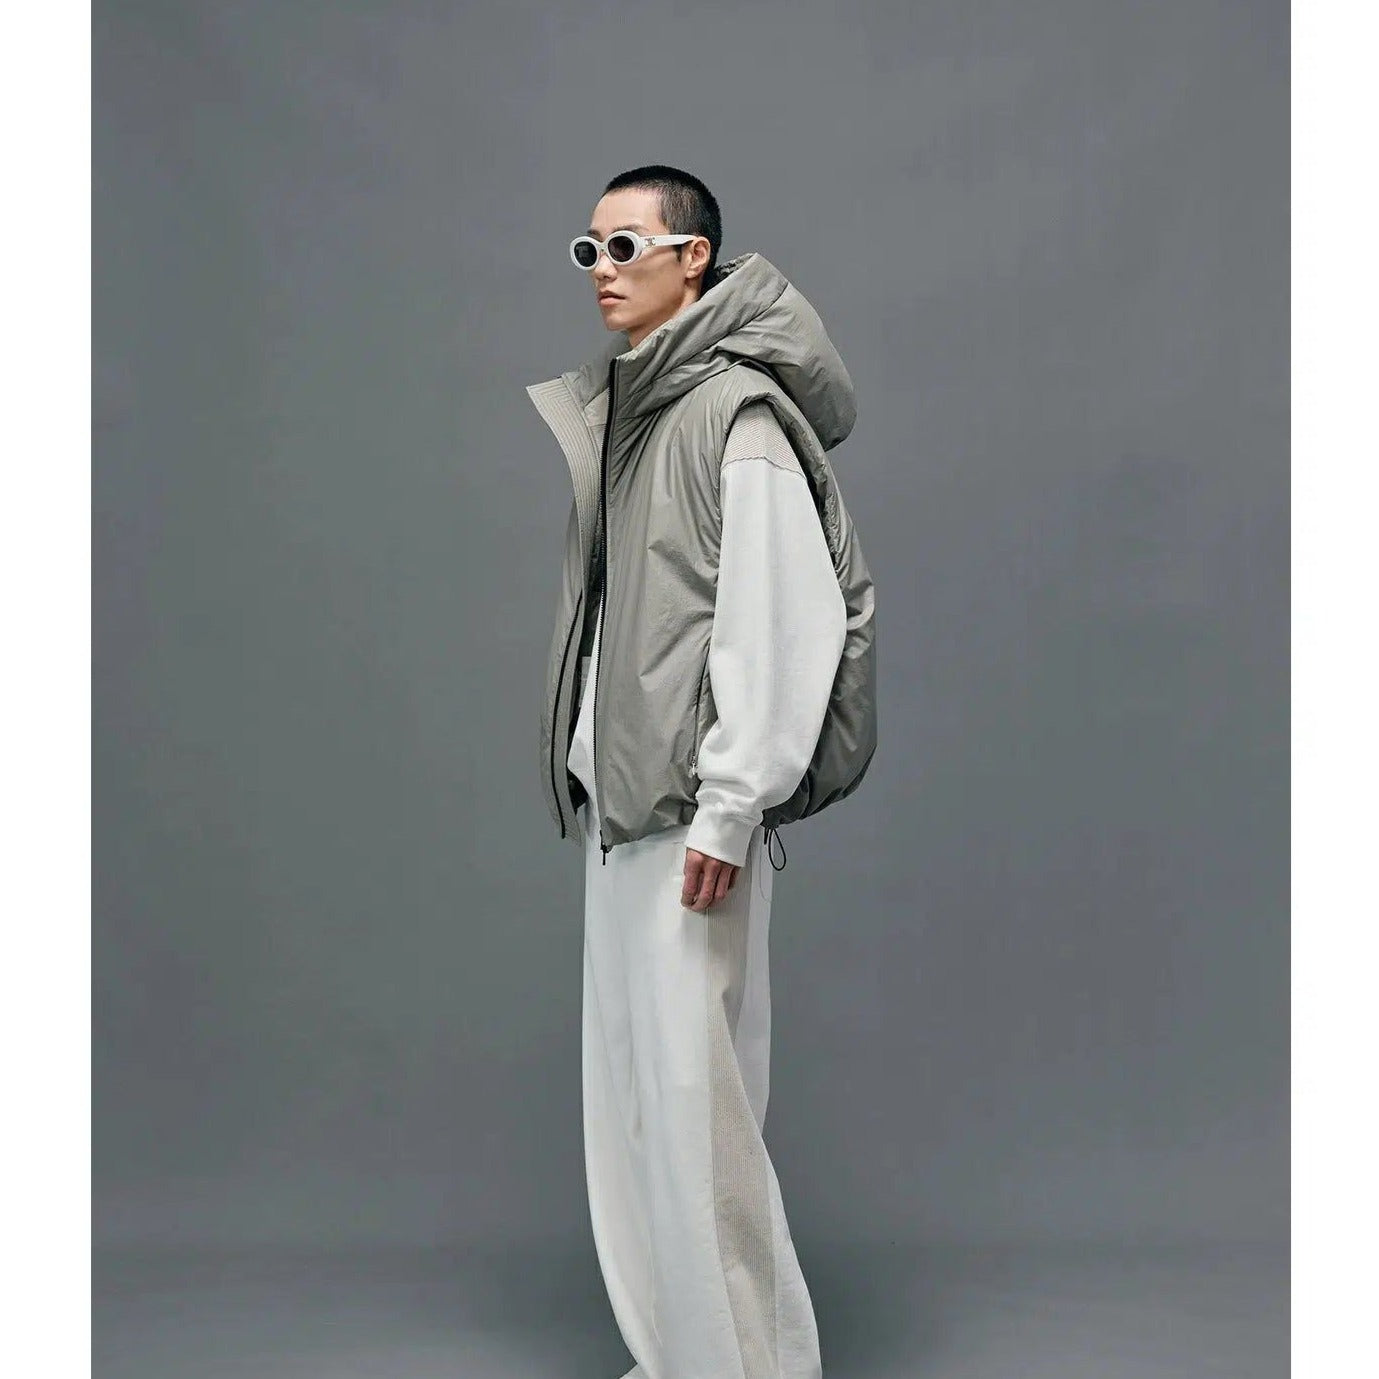 Wide Hood Zipped Puffer Jacket Korean Street Fashion Jacket By NANS Shop Online at OH Vault